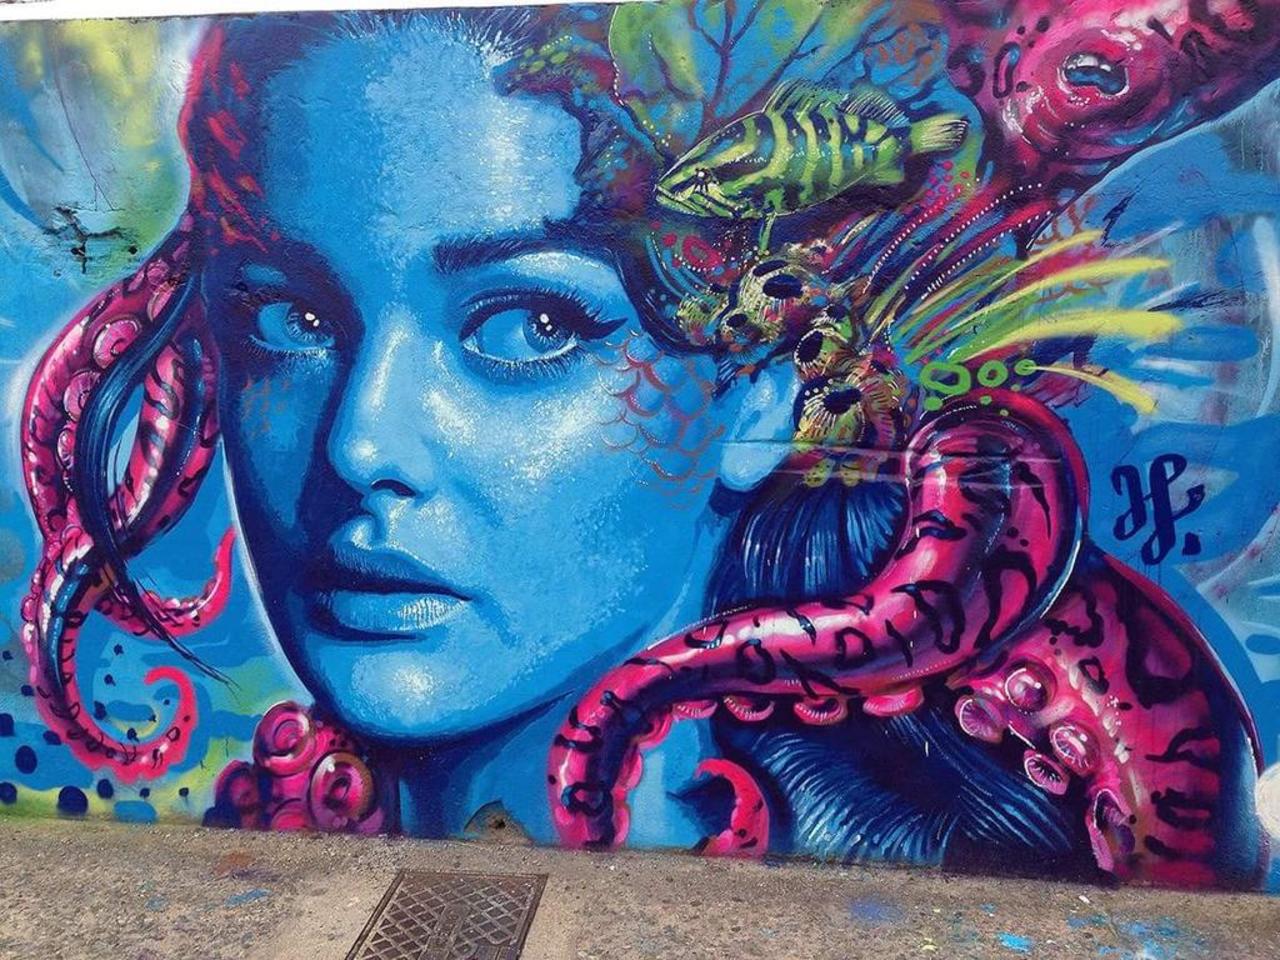 "'The octopus woman' by Valdi-Valdi #streetart #mural" http://t.co/FgJplCzlaq